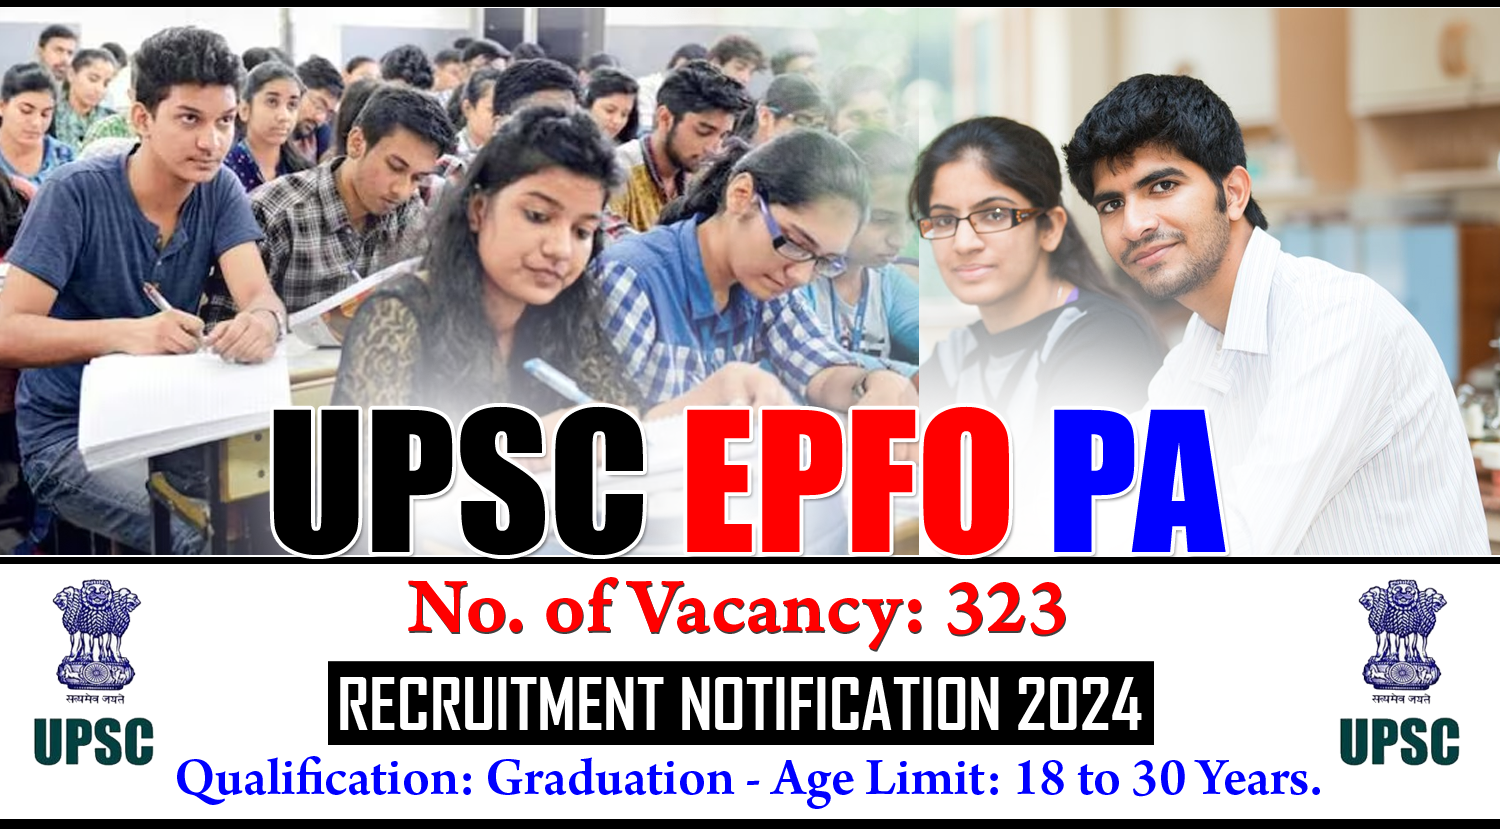 UPSC EPFO PA Recruitment Notification 2024 for 323 Vacancies